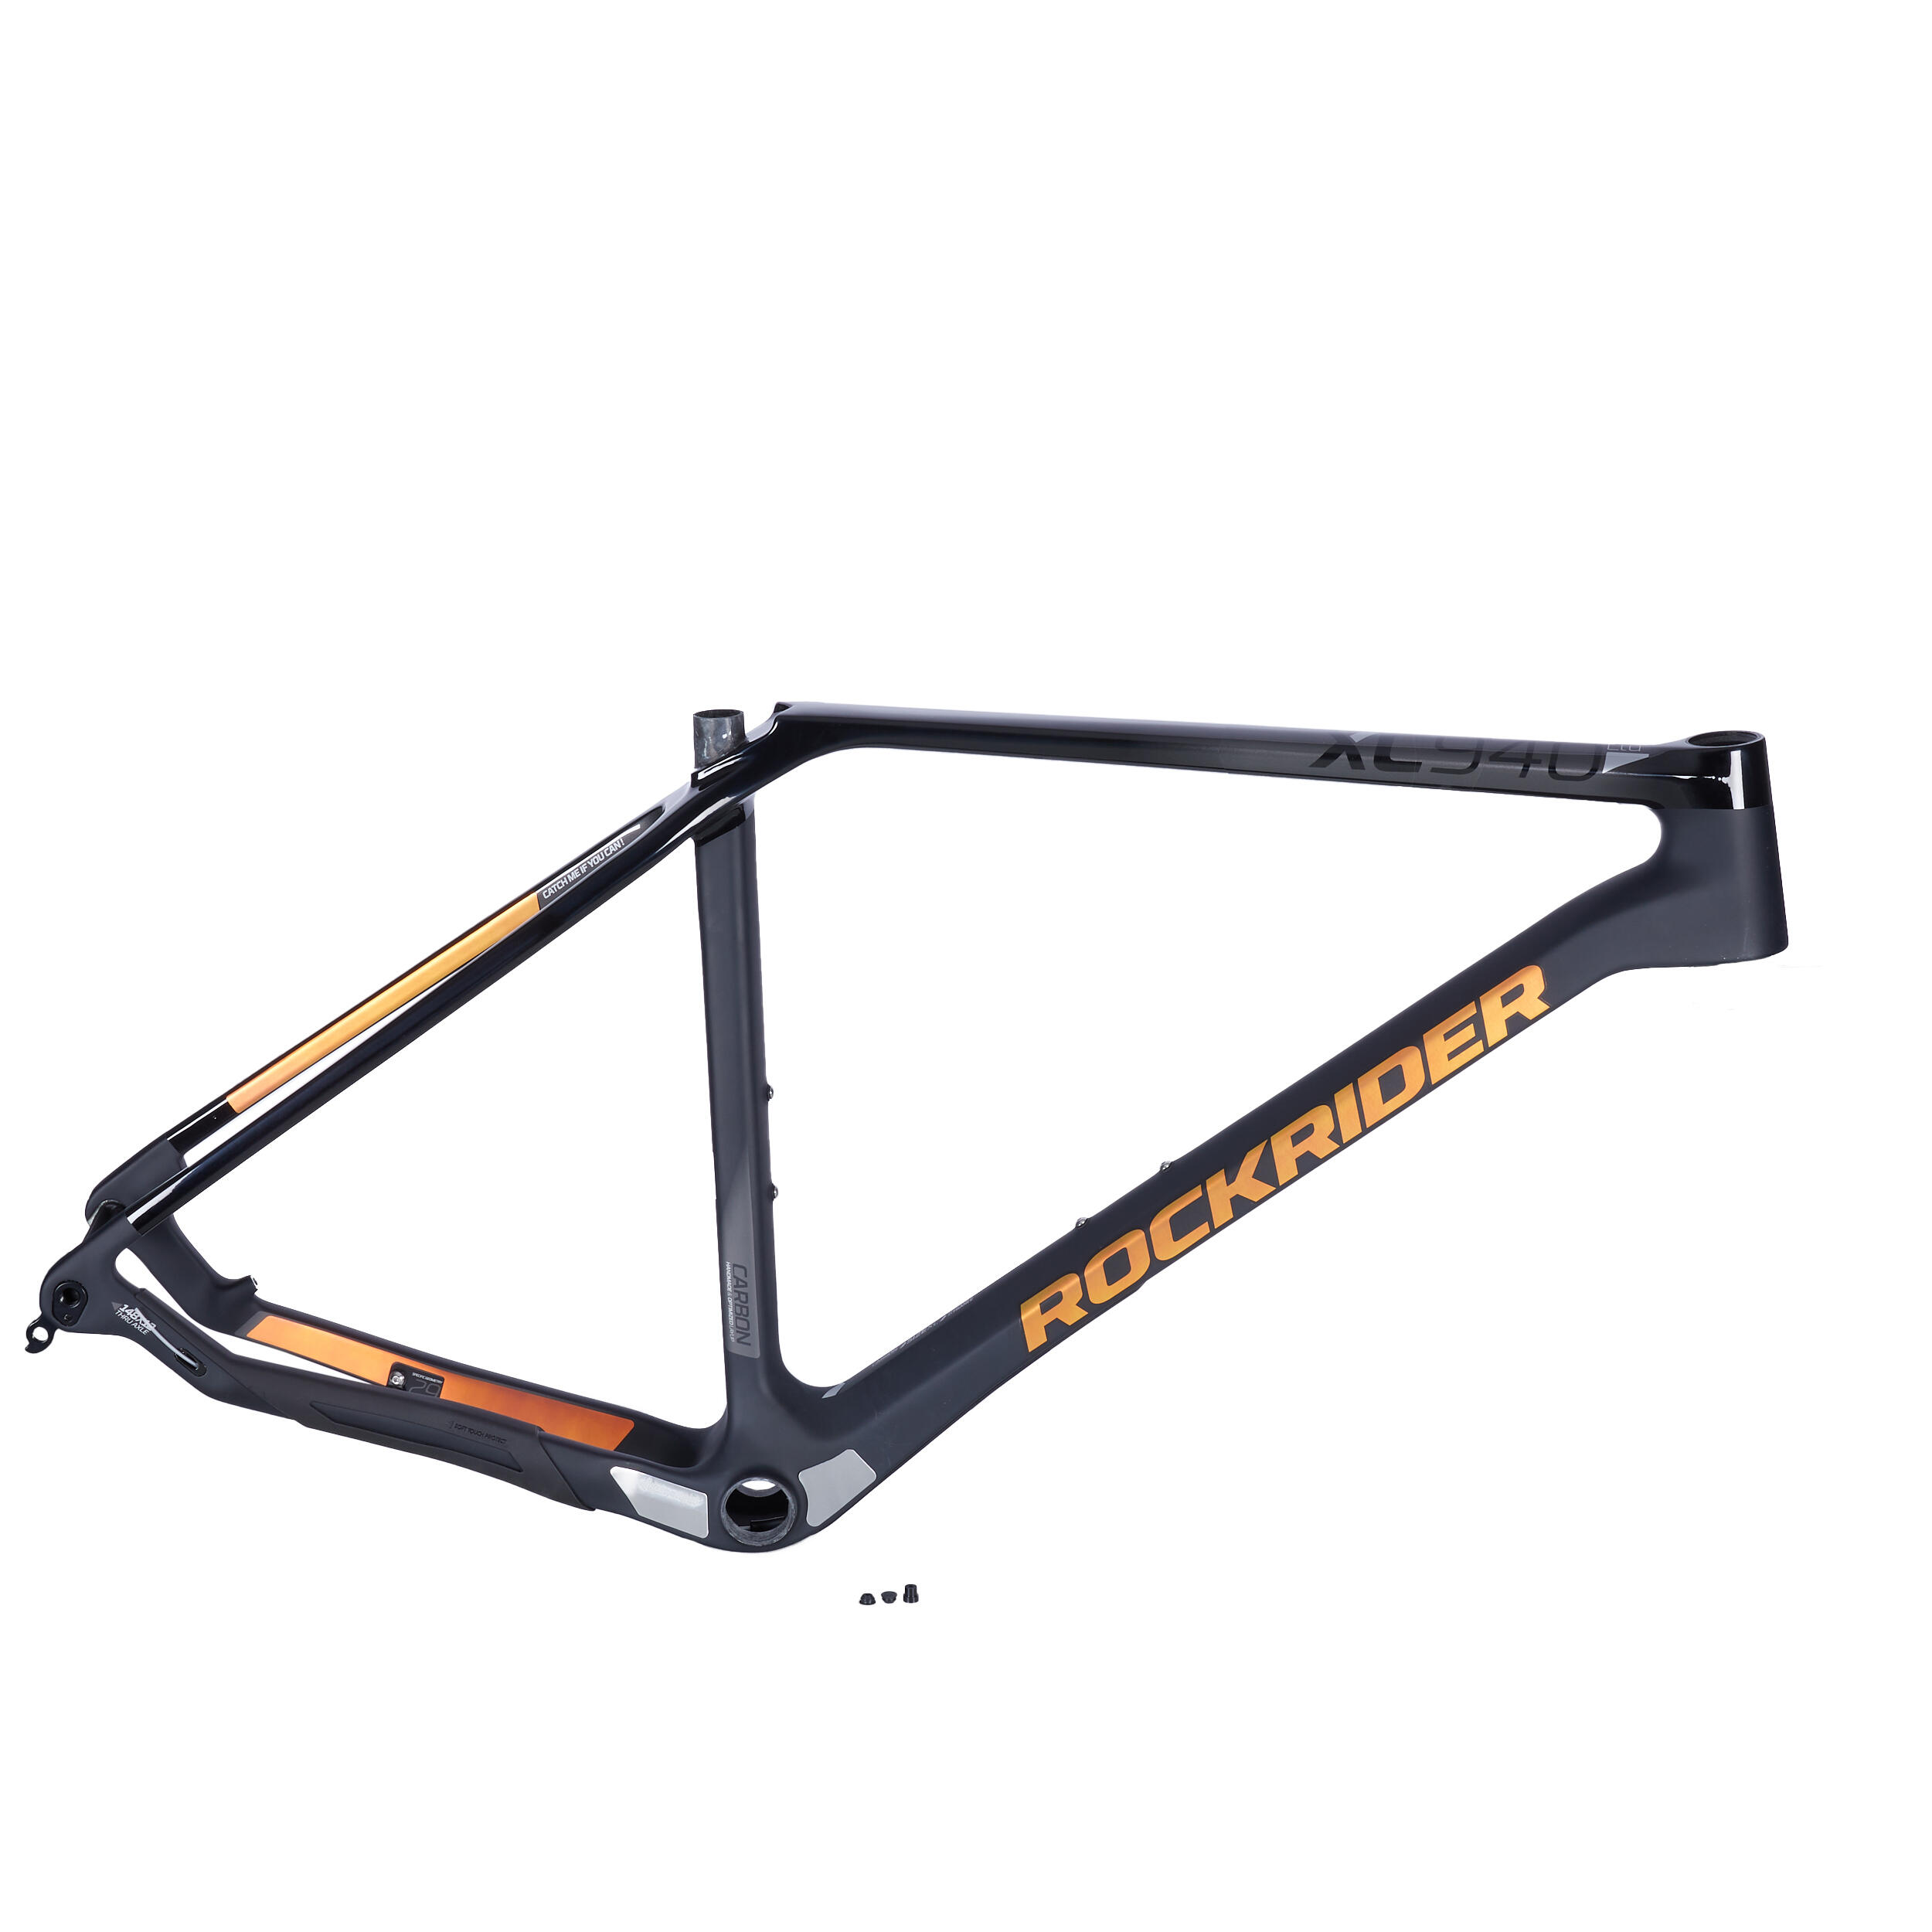 Carbon Boost Mountain Bike Frame XC 940 Ltd DBC19 1/3